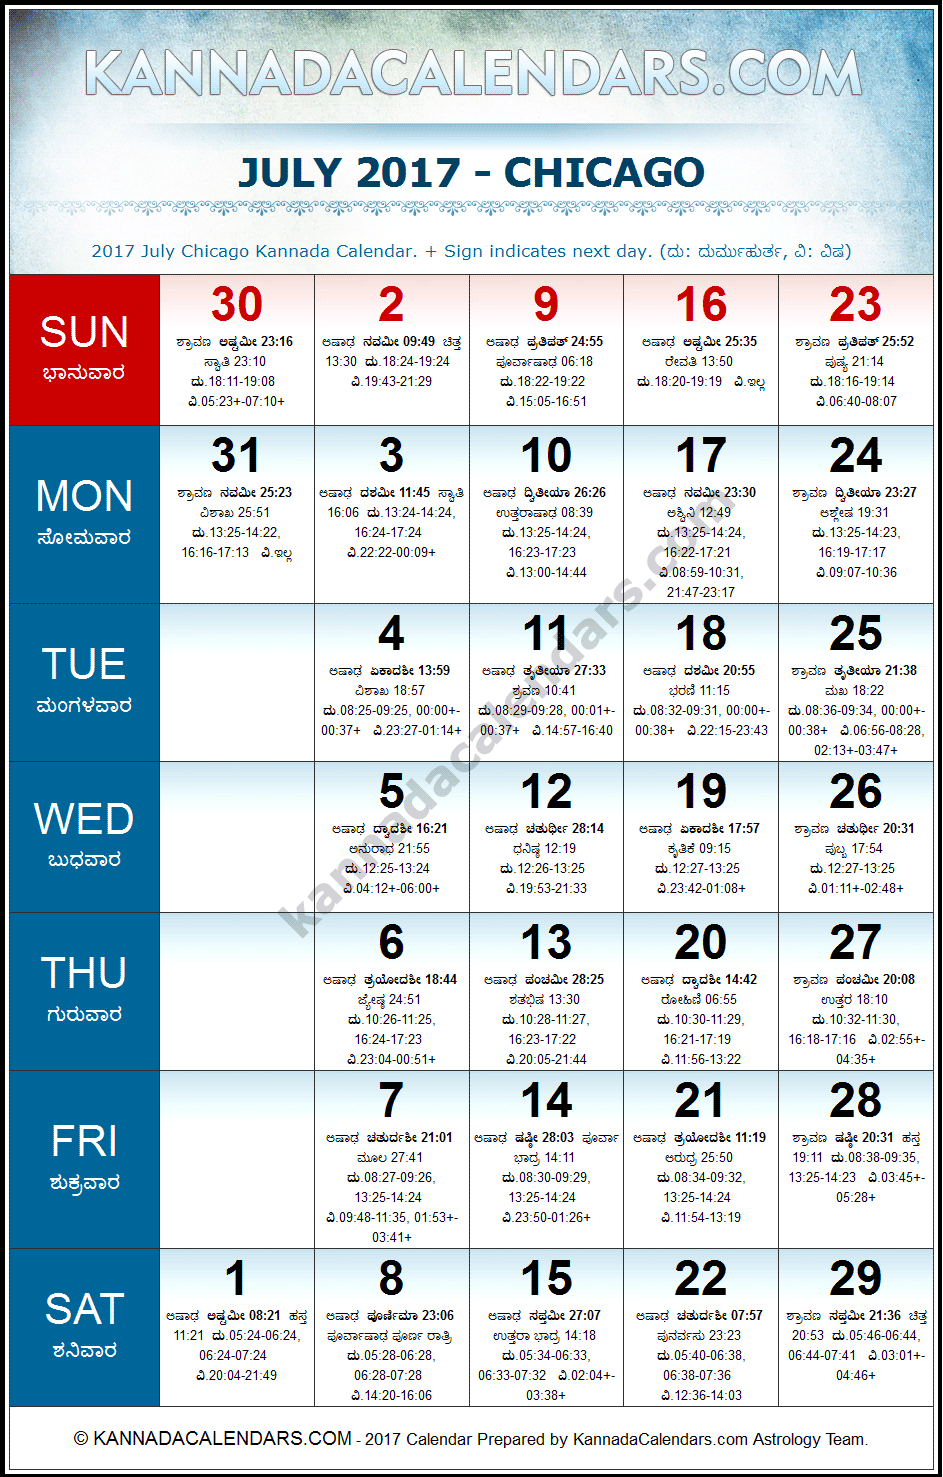 July 2017 Kannada Calendar for Chicago, USA